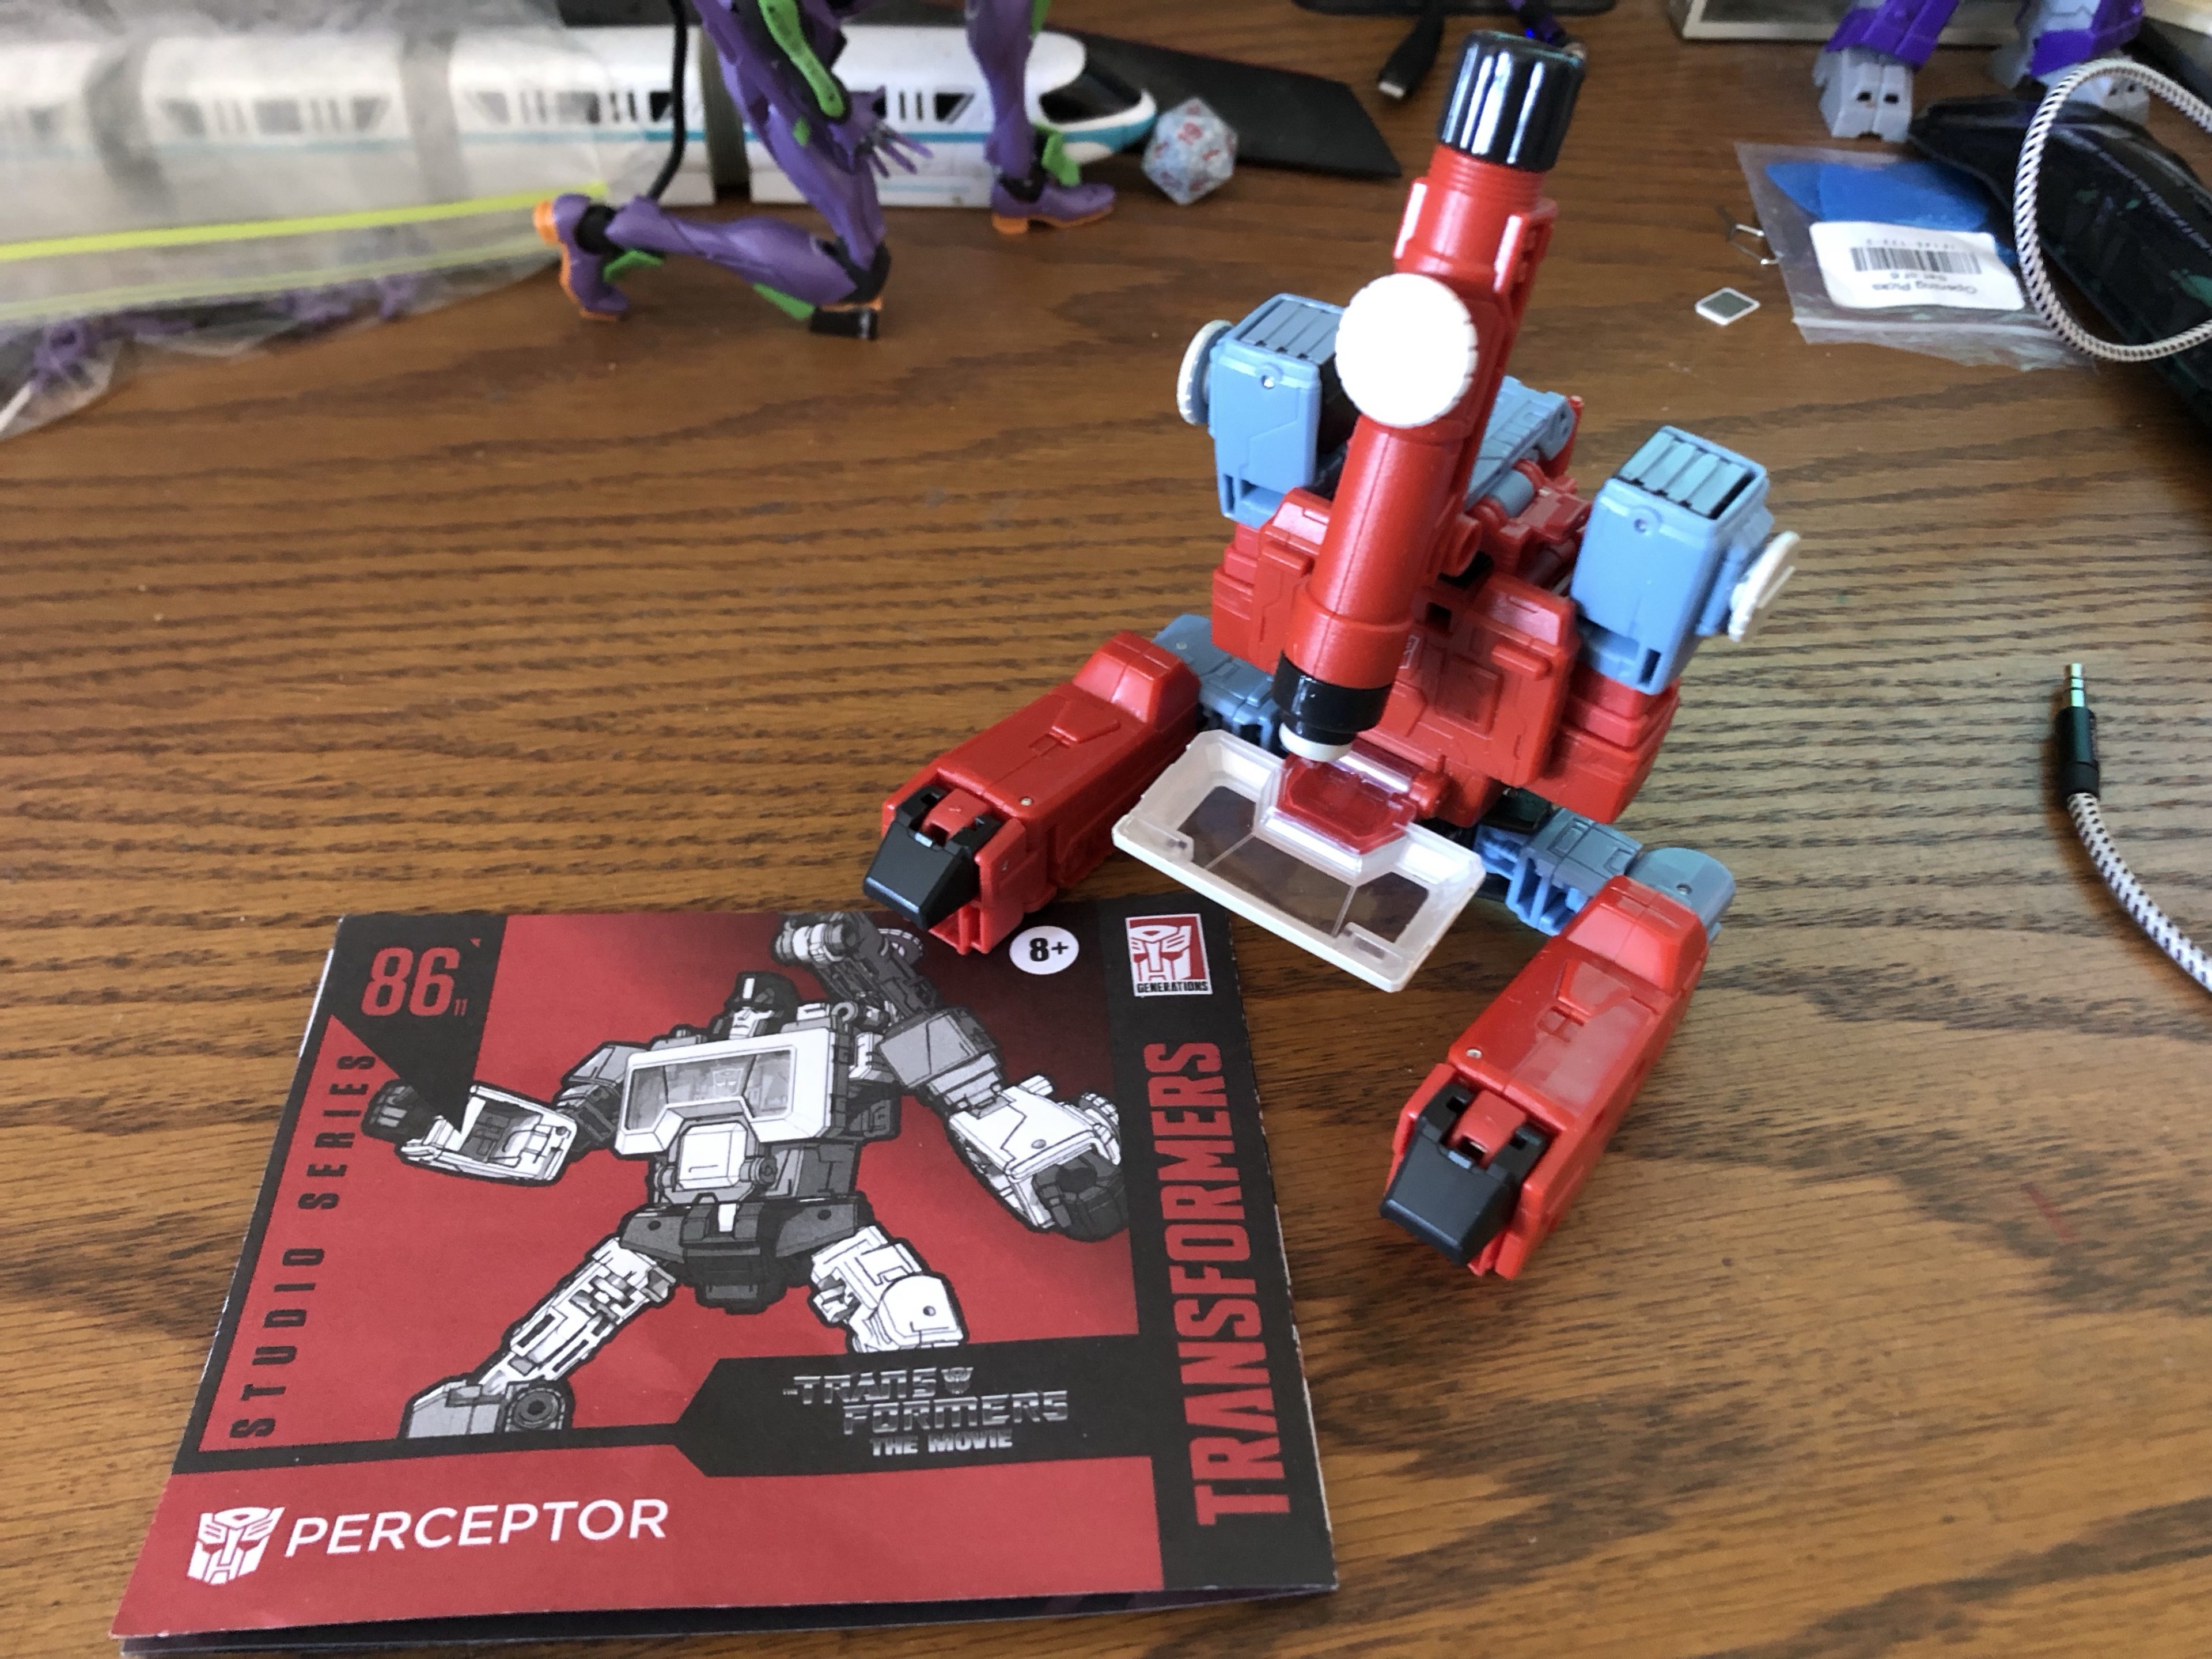 Perceptor toy in microscope mode